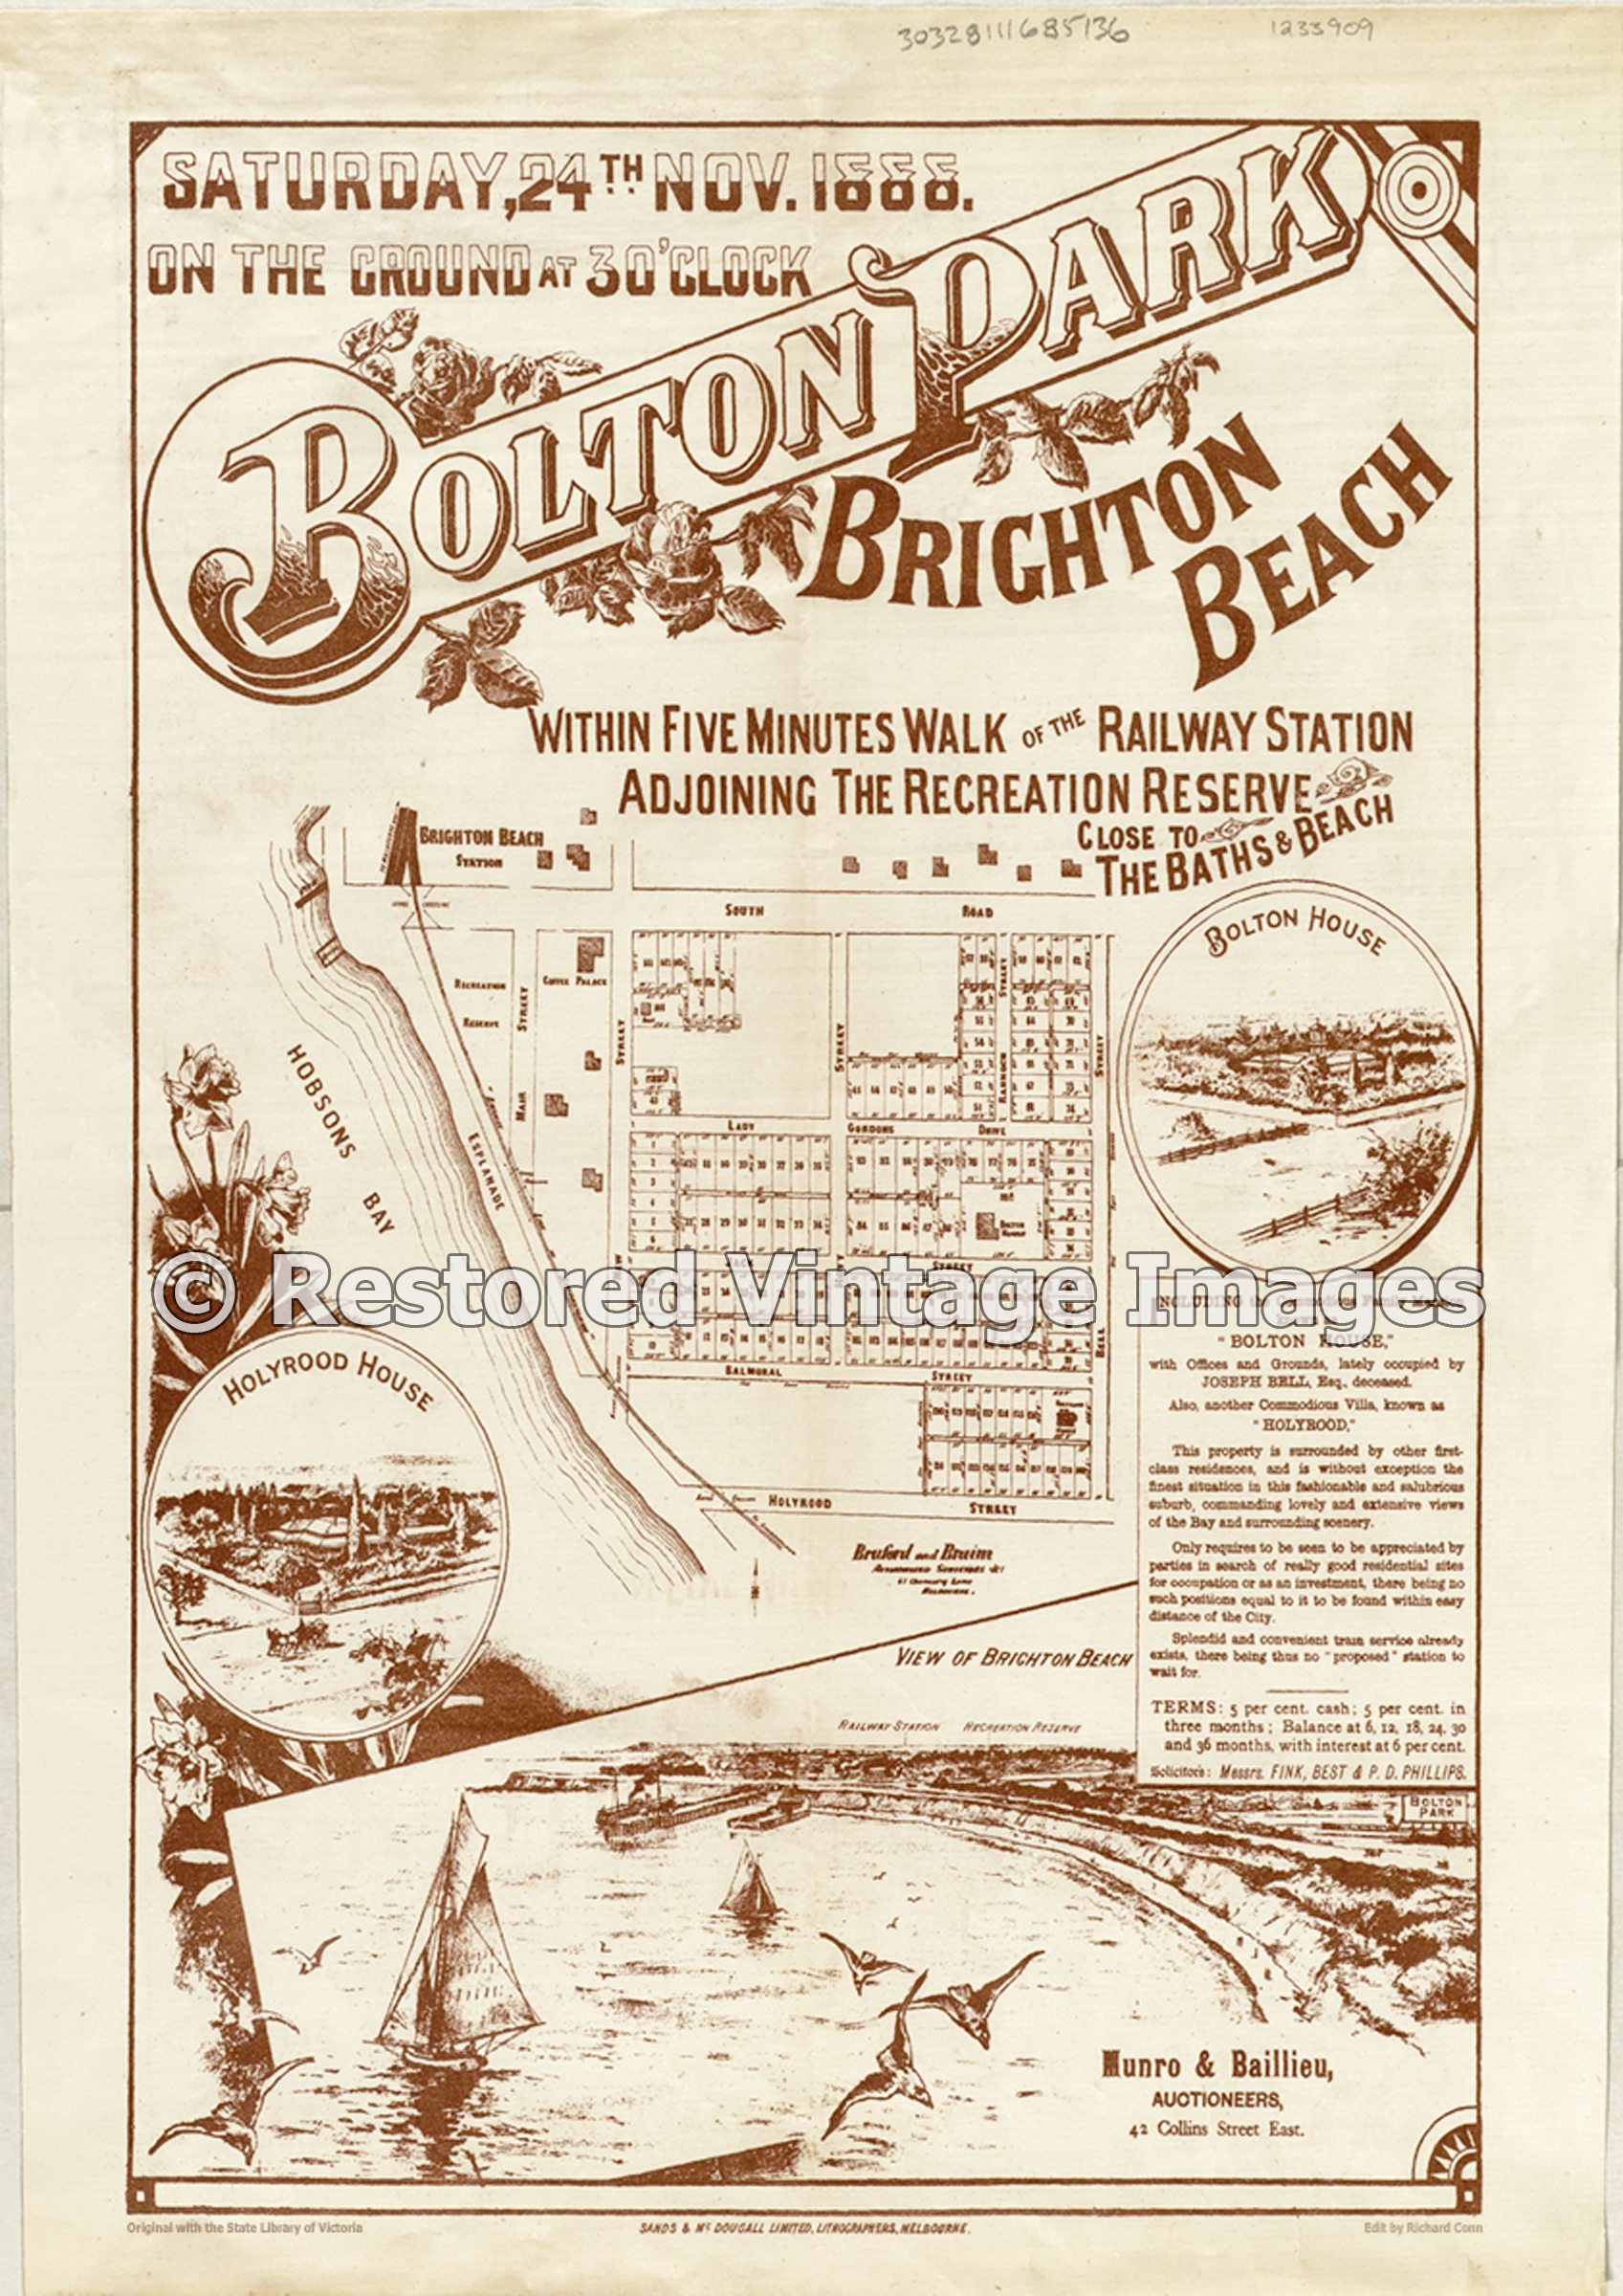 Bolton Park Brighton Beach 24th November 1888 – Hampton